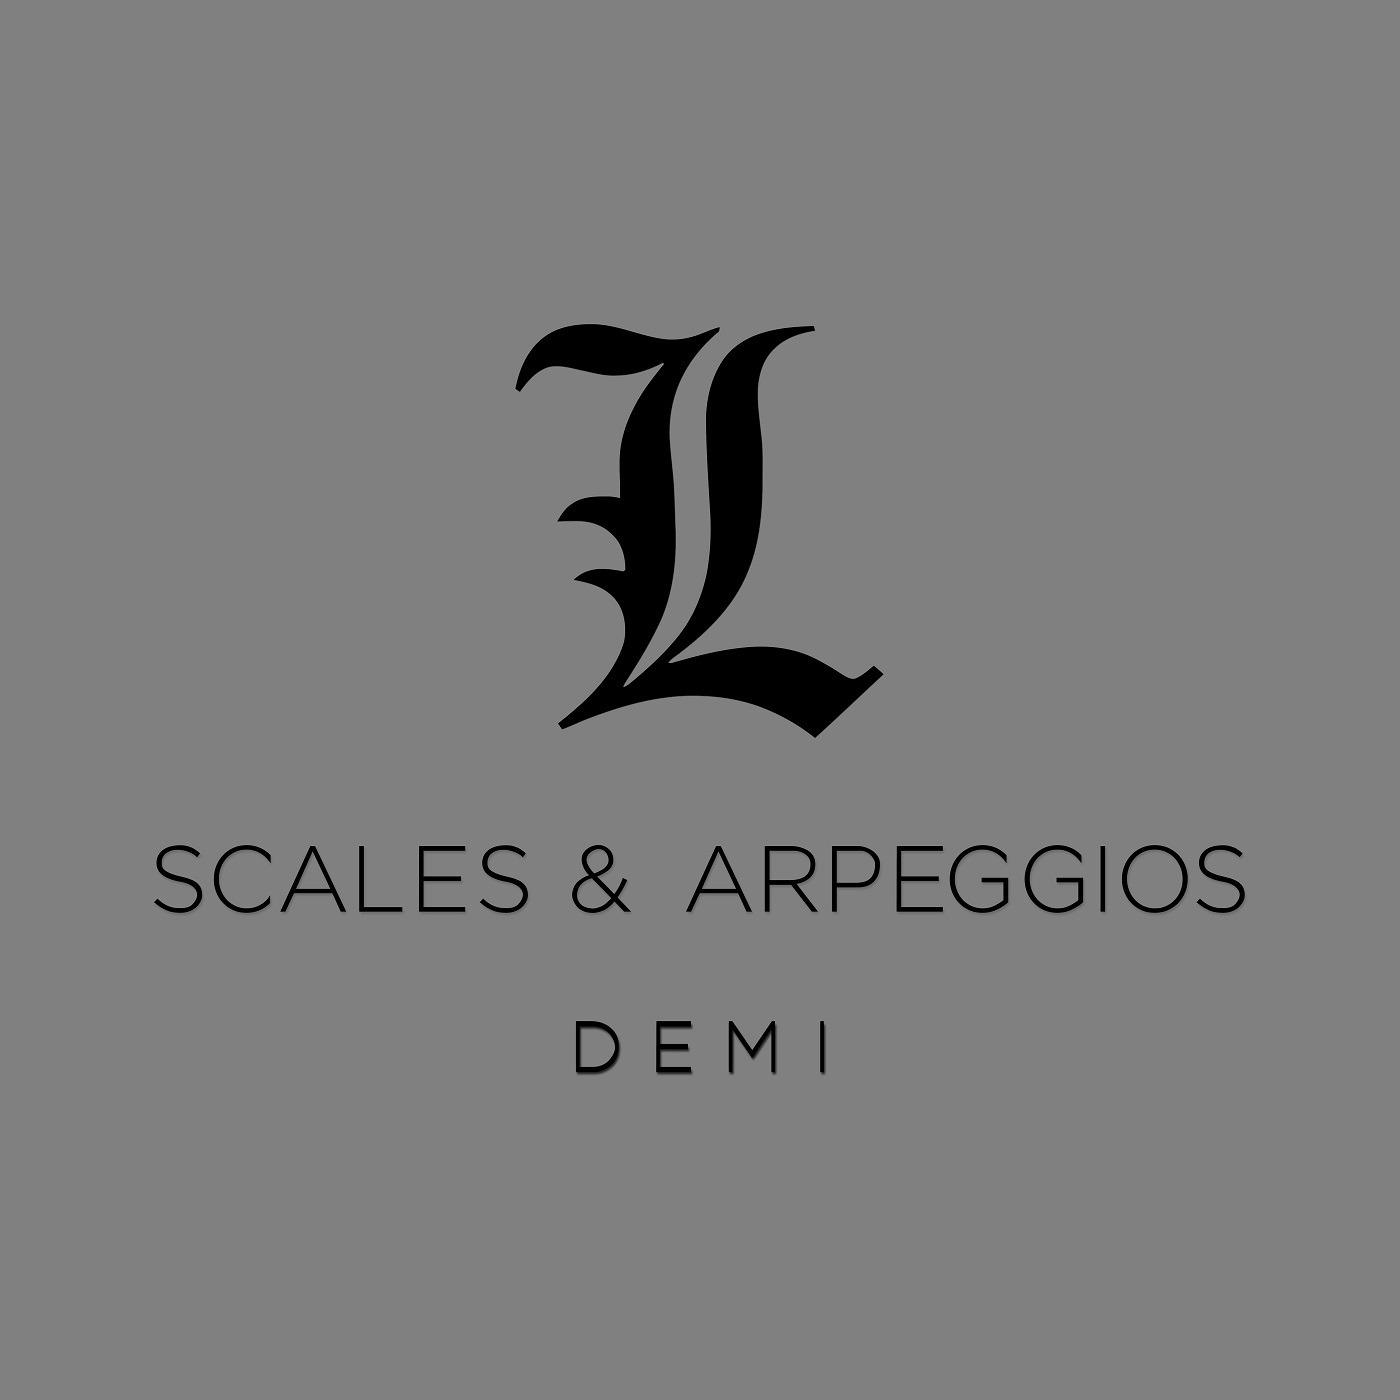 Scales & Arpeggios - Demi - Lydian Scales